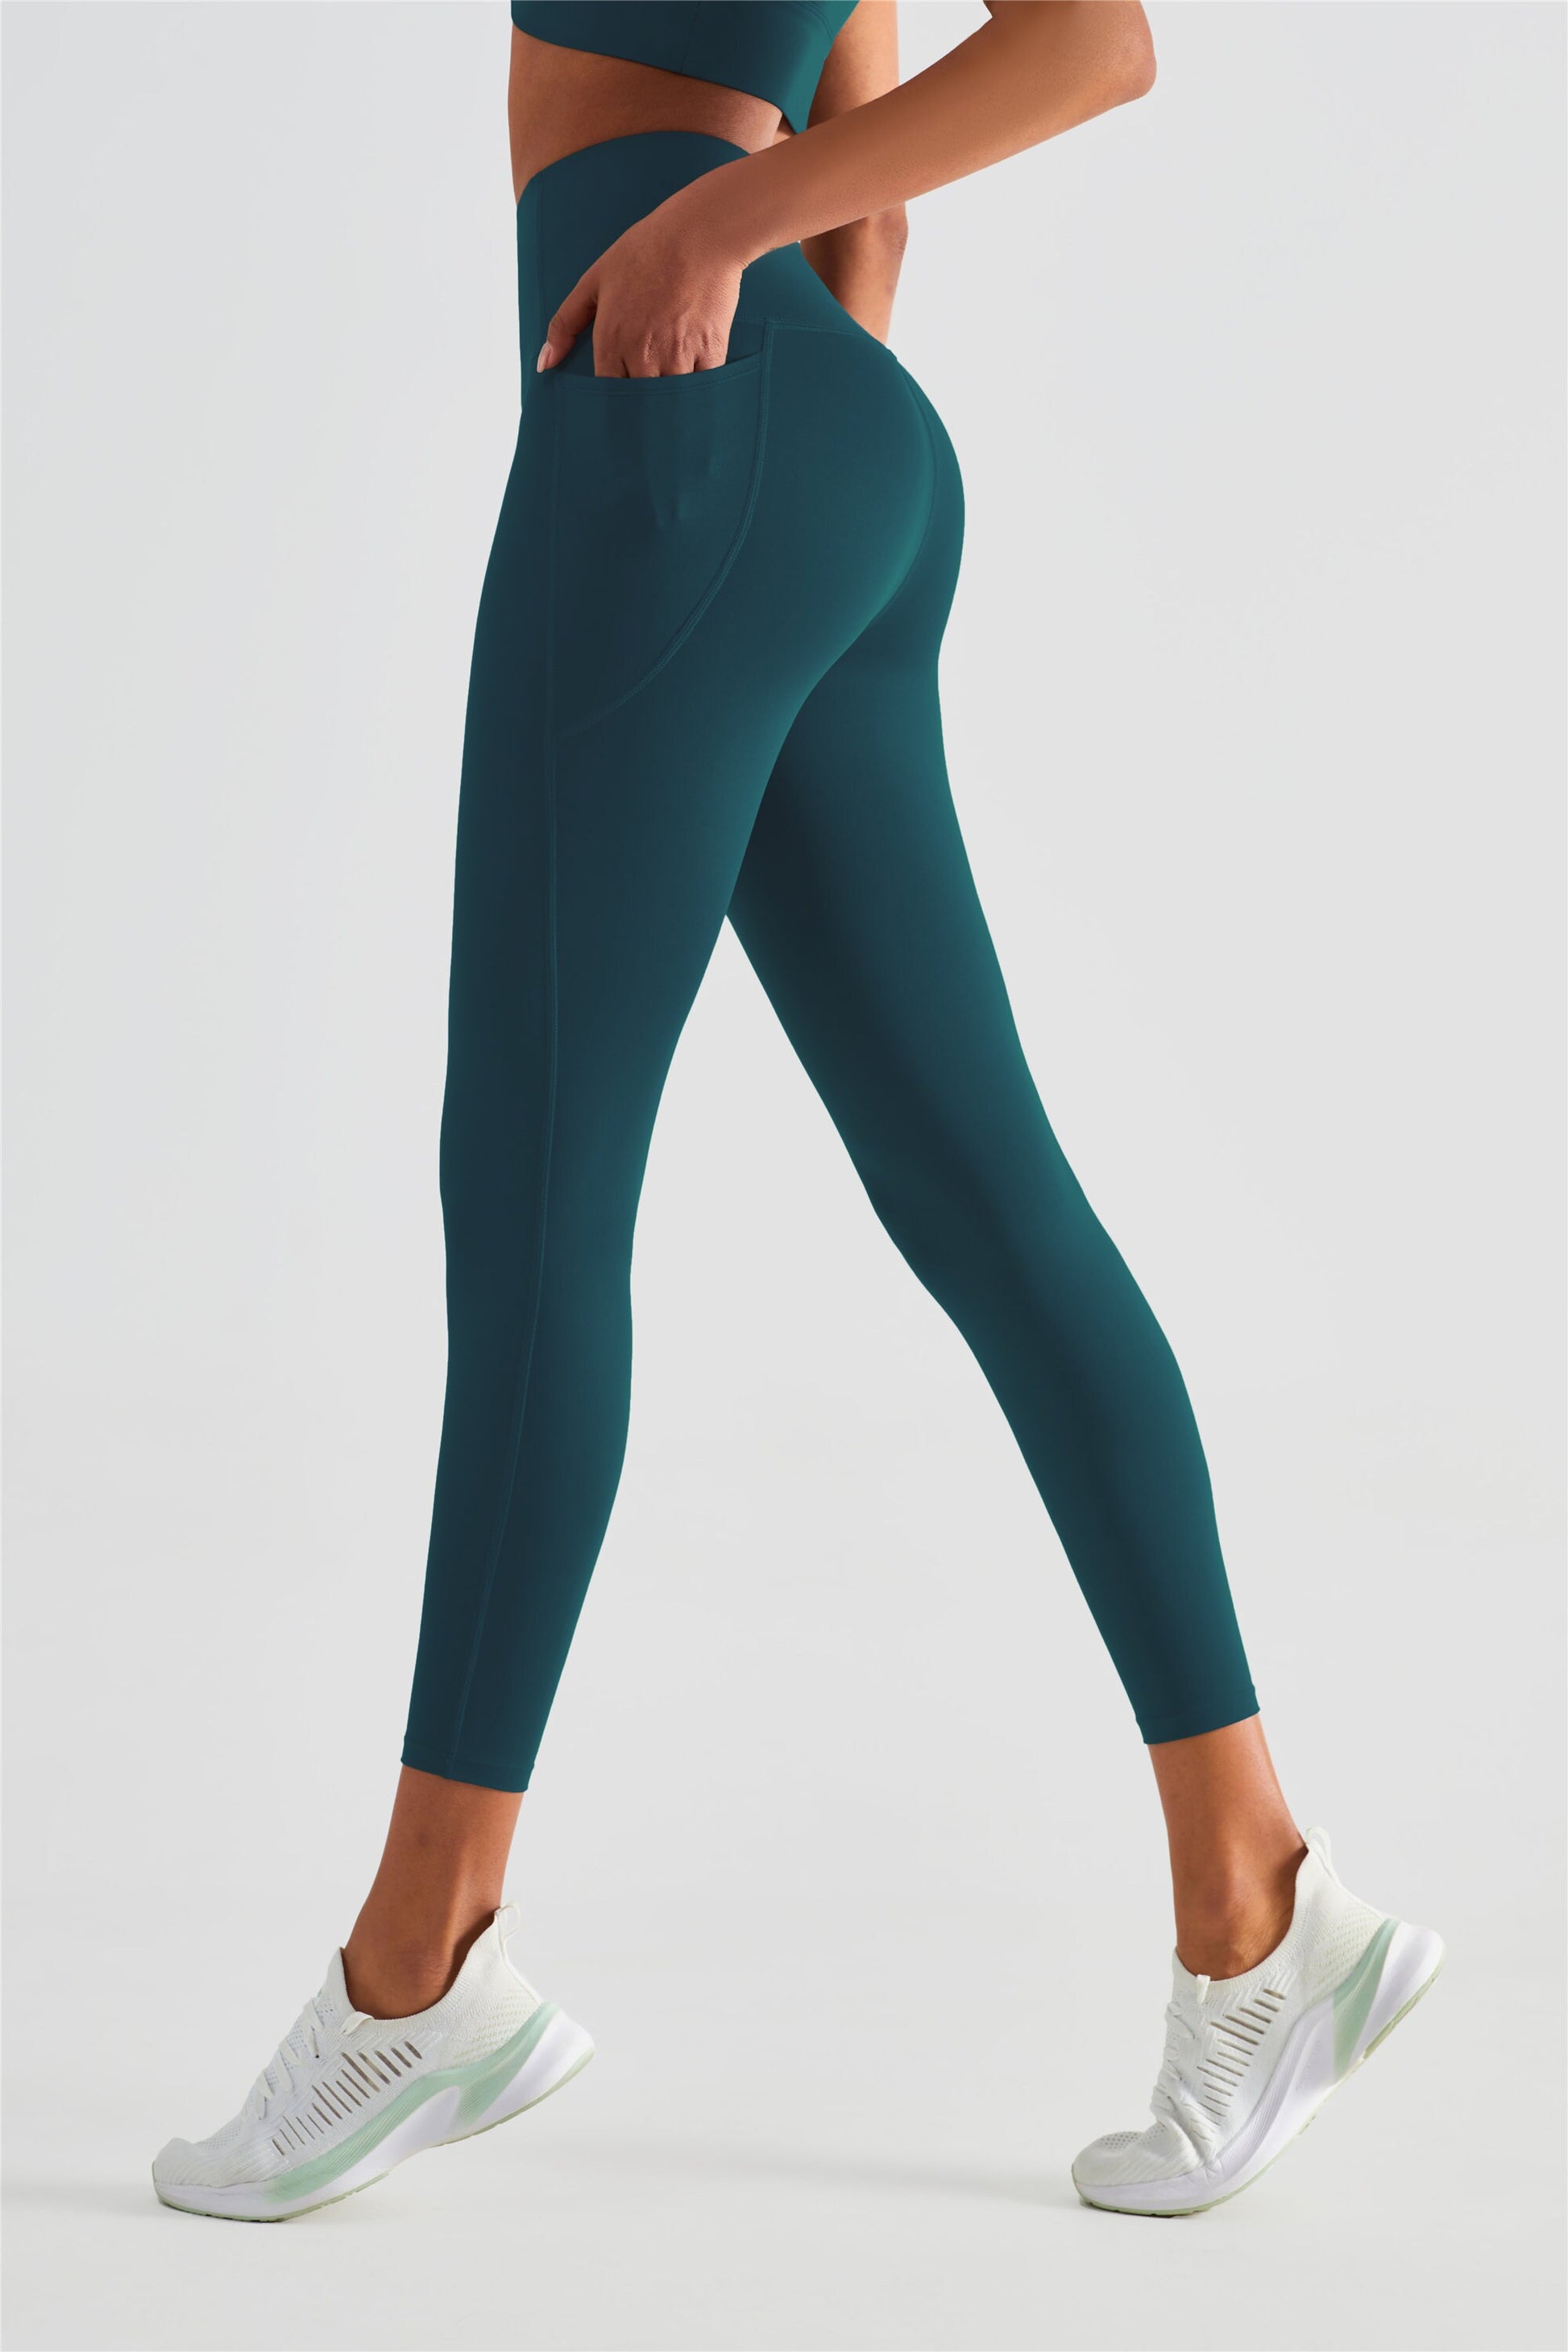 Elegant Poly Lycra Solid Sports Tights For Women - Xl at Rs 399  Women Yoga  Leggings, Women Workout Yoga Pants, Women Yoga Sports Tight Leggings, Yoga  Leggings, योगा पैंट - Instaecart